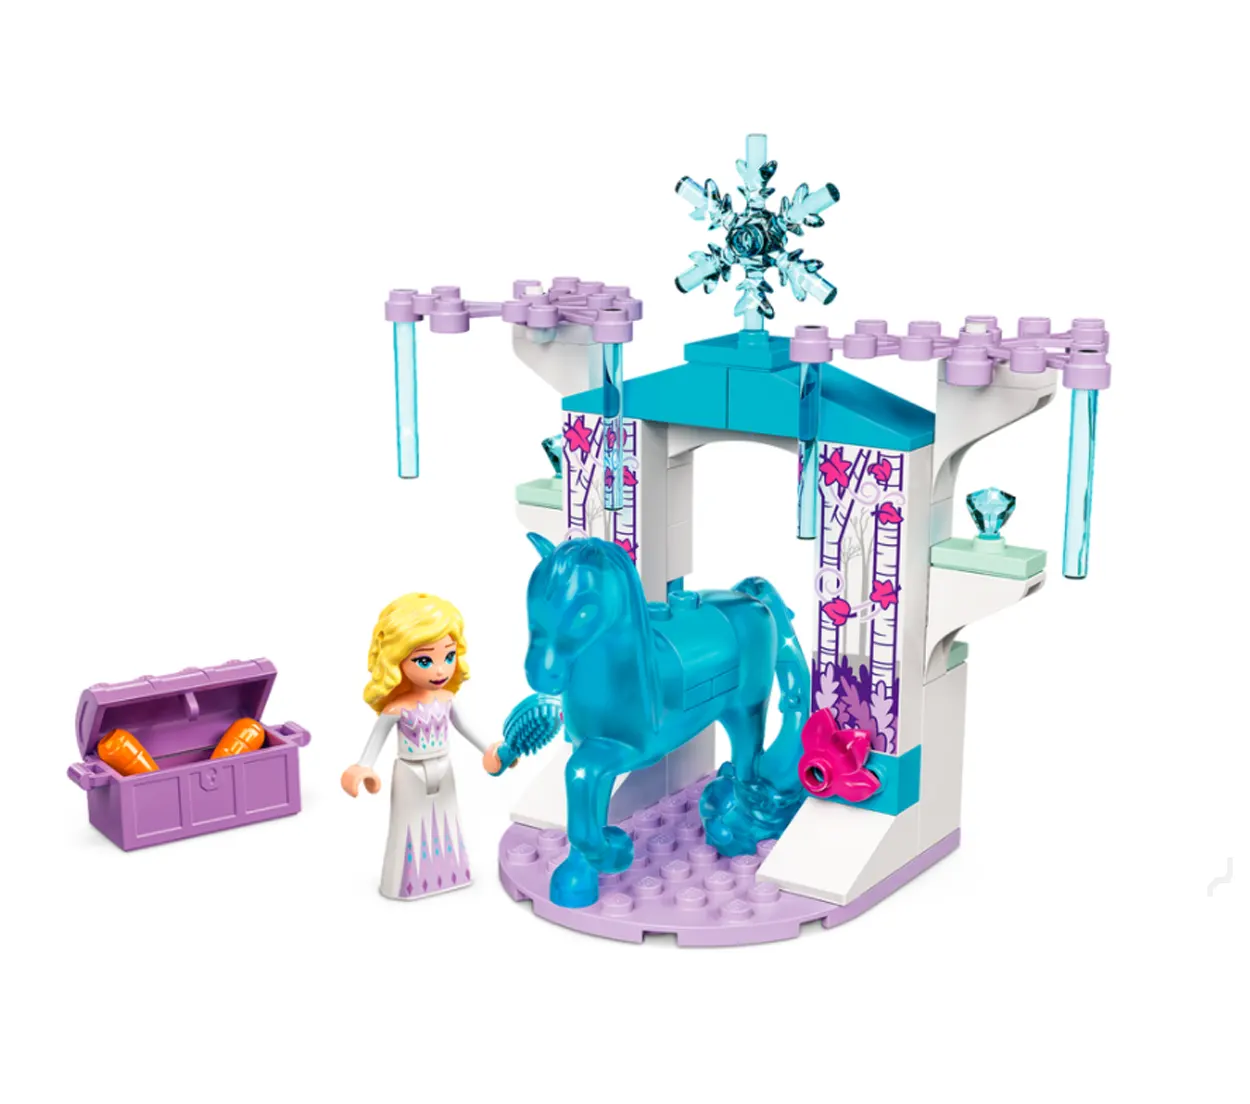 LEGO 75324 Disney Princess New Sets for March 2022 Revealed | Ariel, Elsa, Nokk